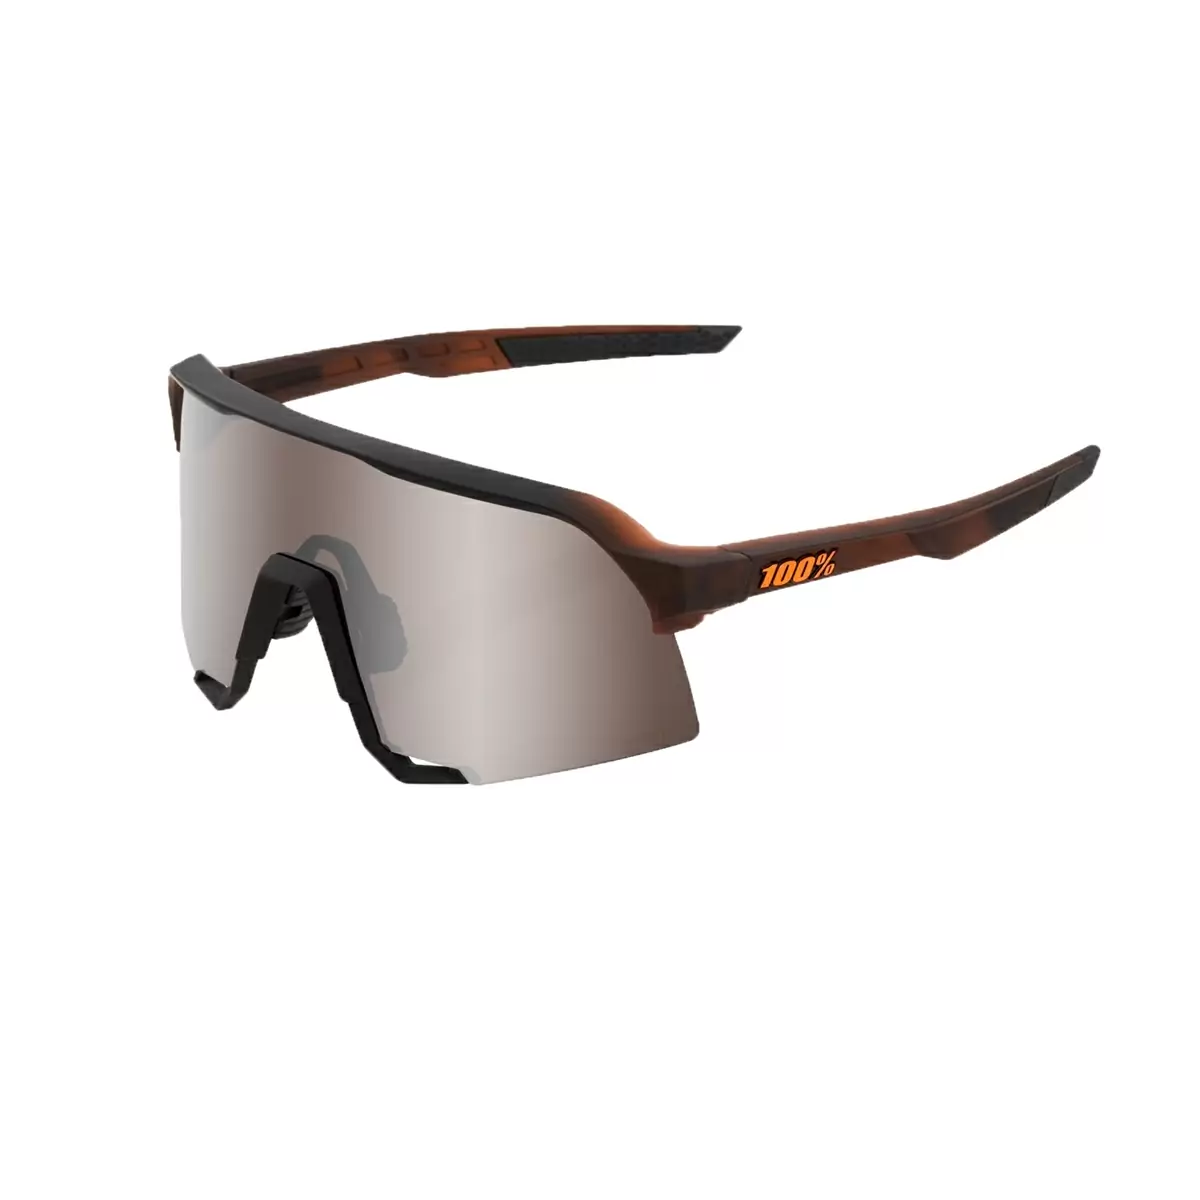 Sunglasses S3 Translucent Matte Brown/HiPER Silver Lens - image